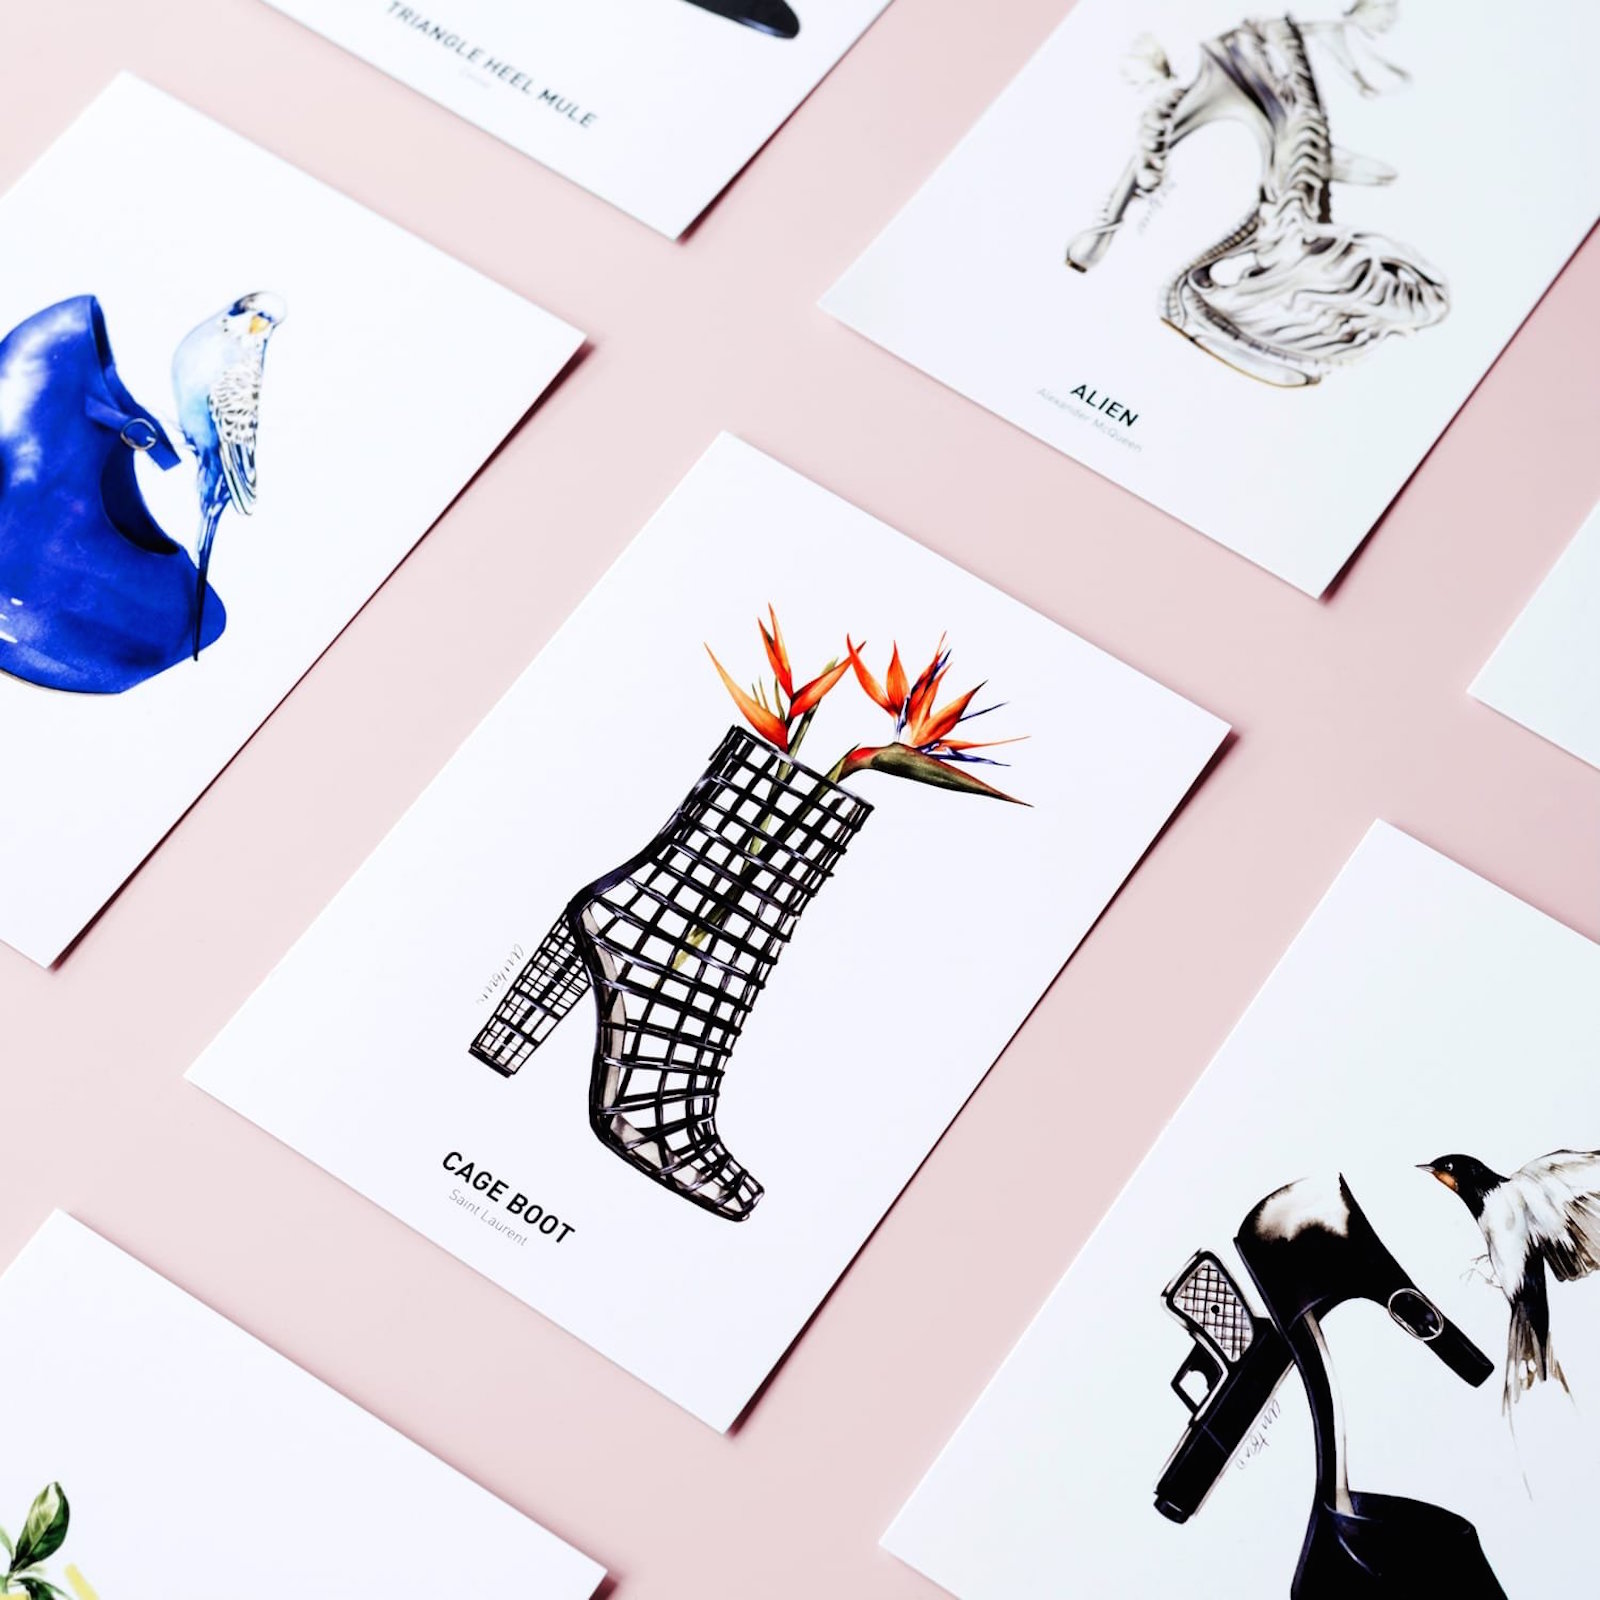 iconcic shoe postcards by antonio soares featured